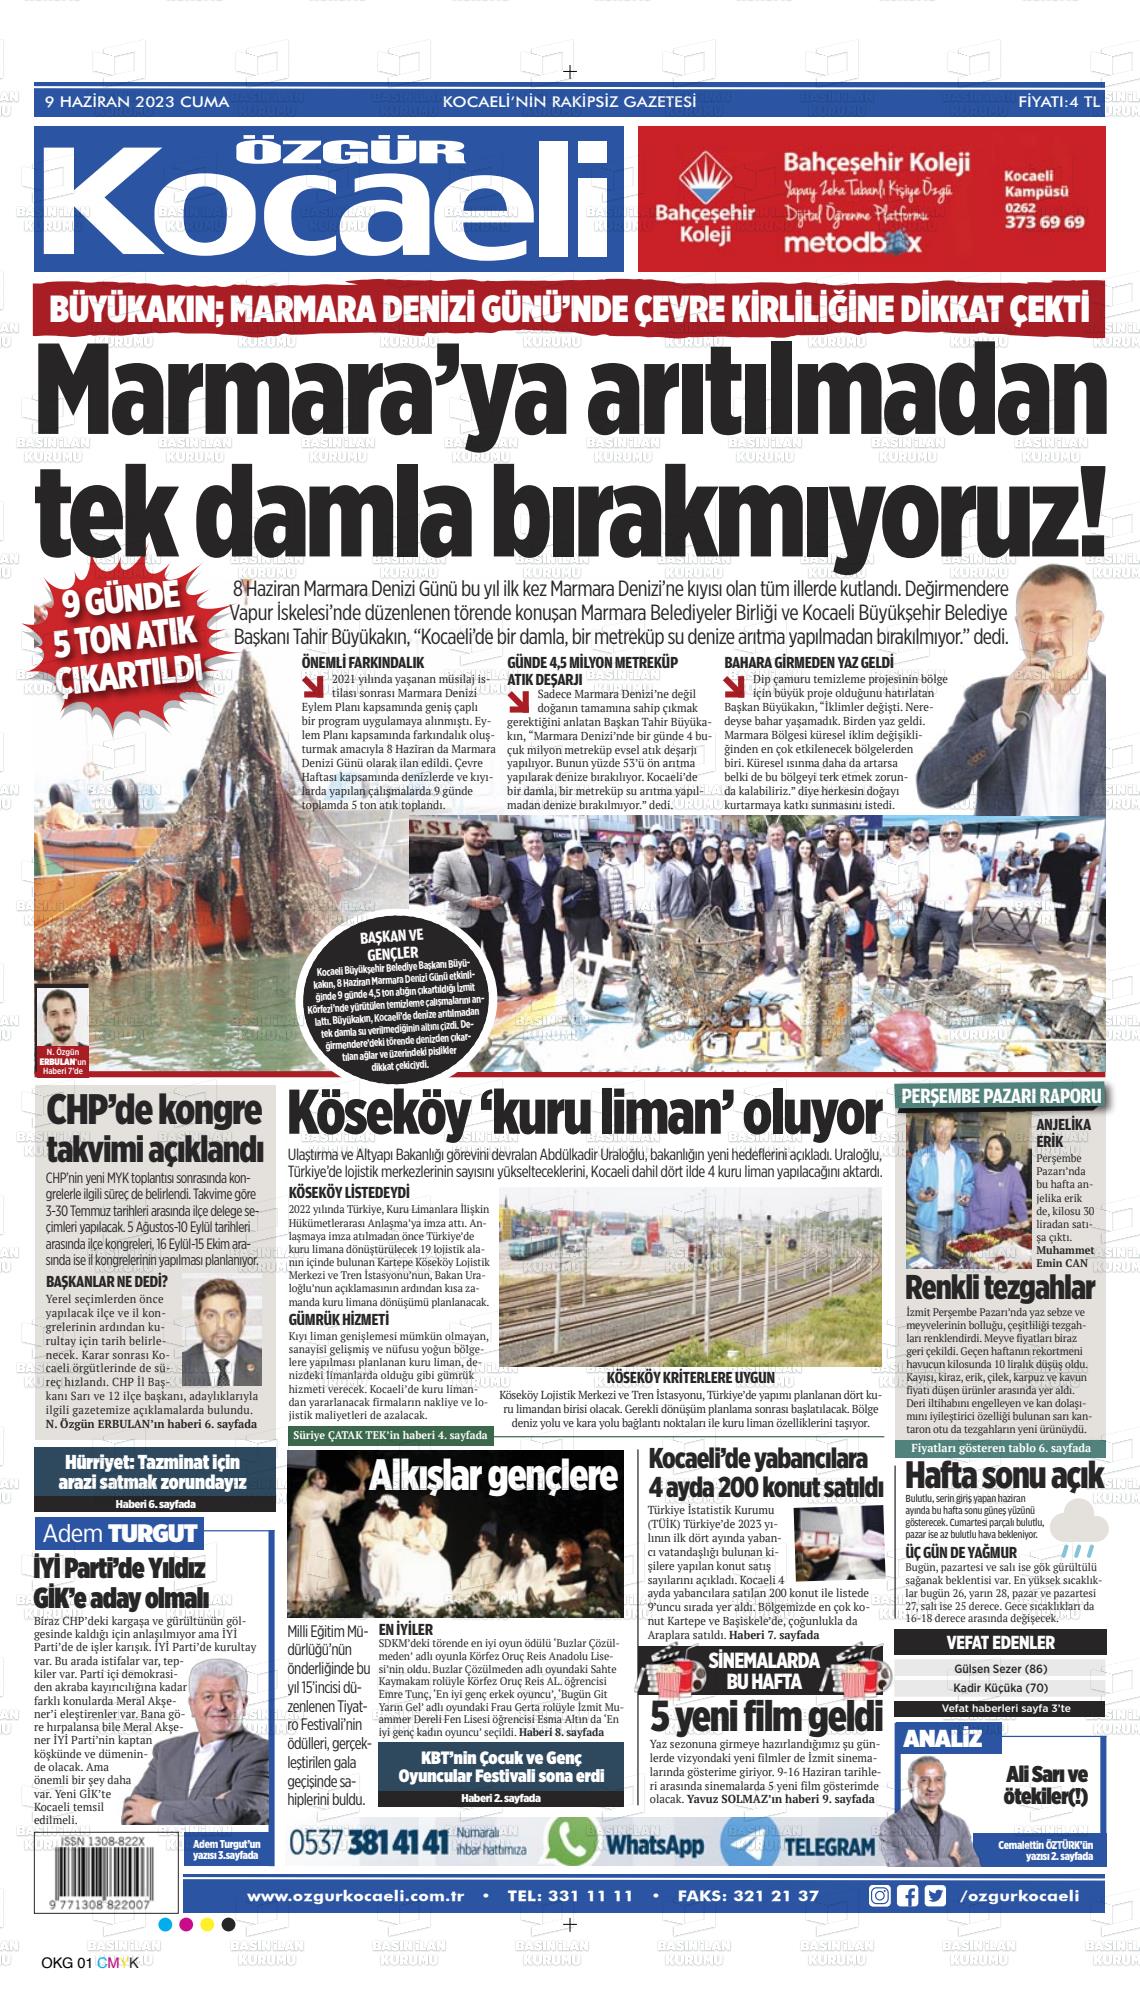 10 Haziran 2023 Özgür Kocaeli Gazete Manşeti